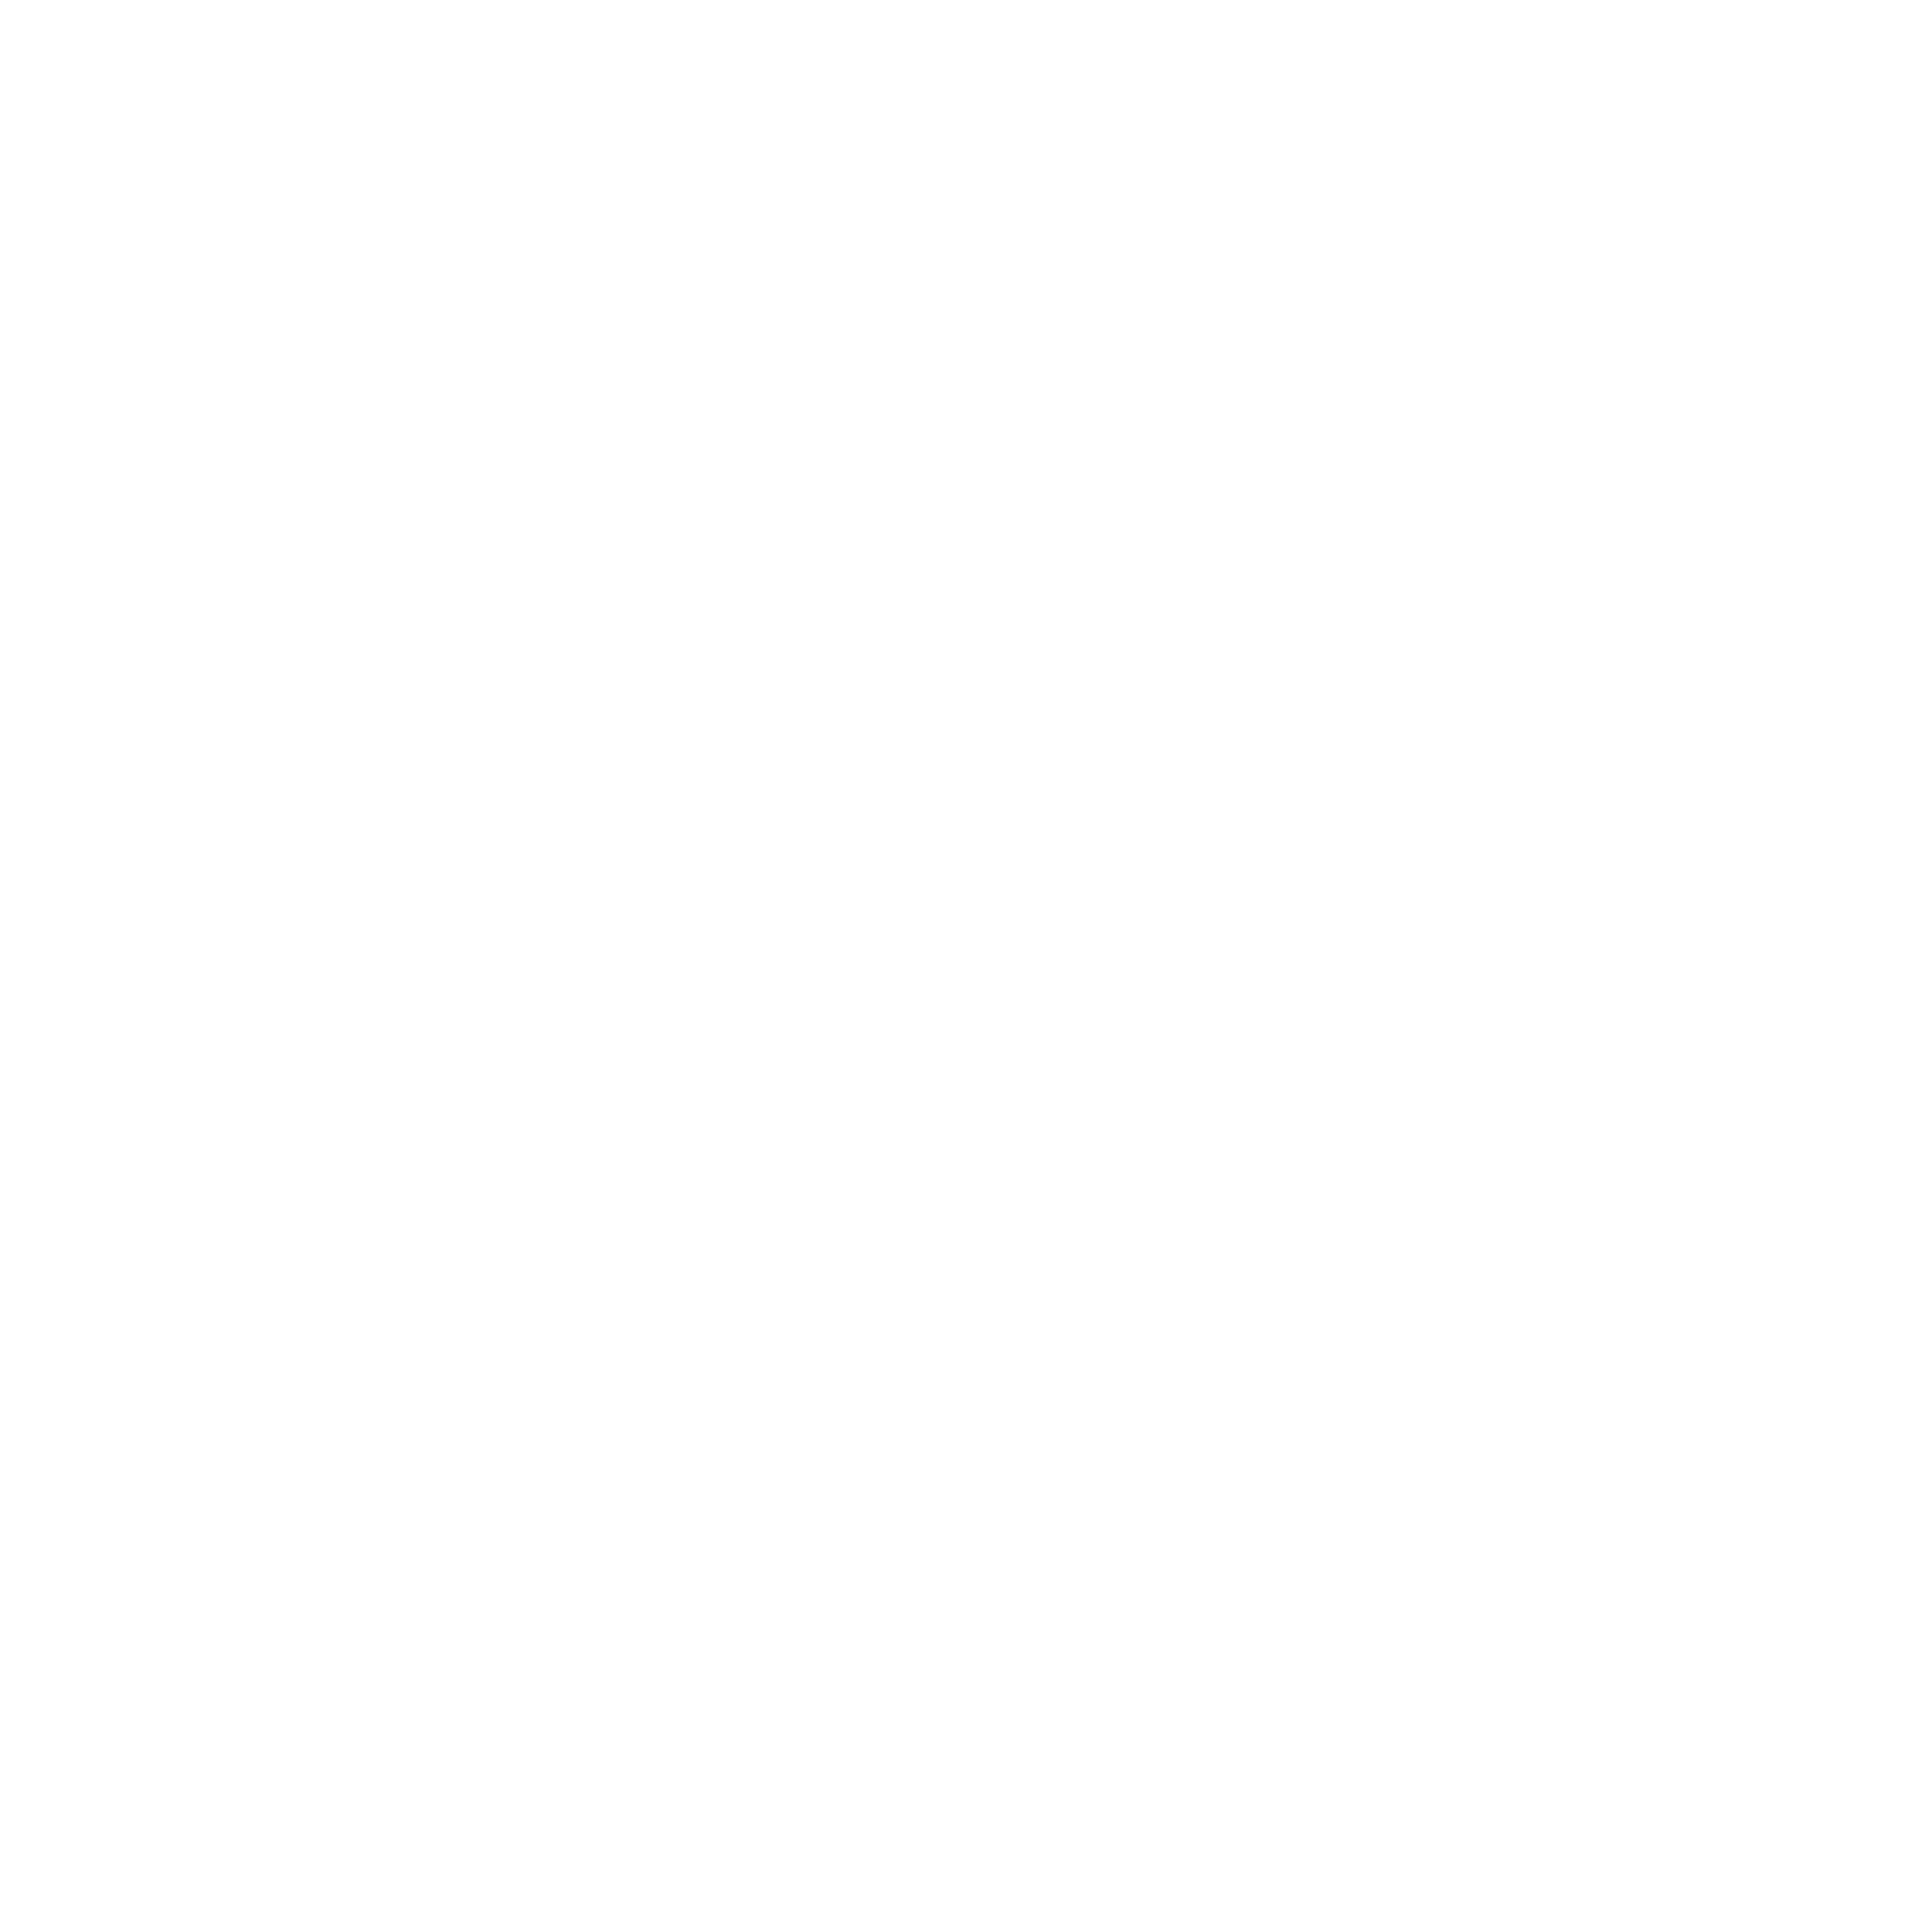 LeShawndaFitzgerald.com